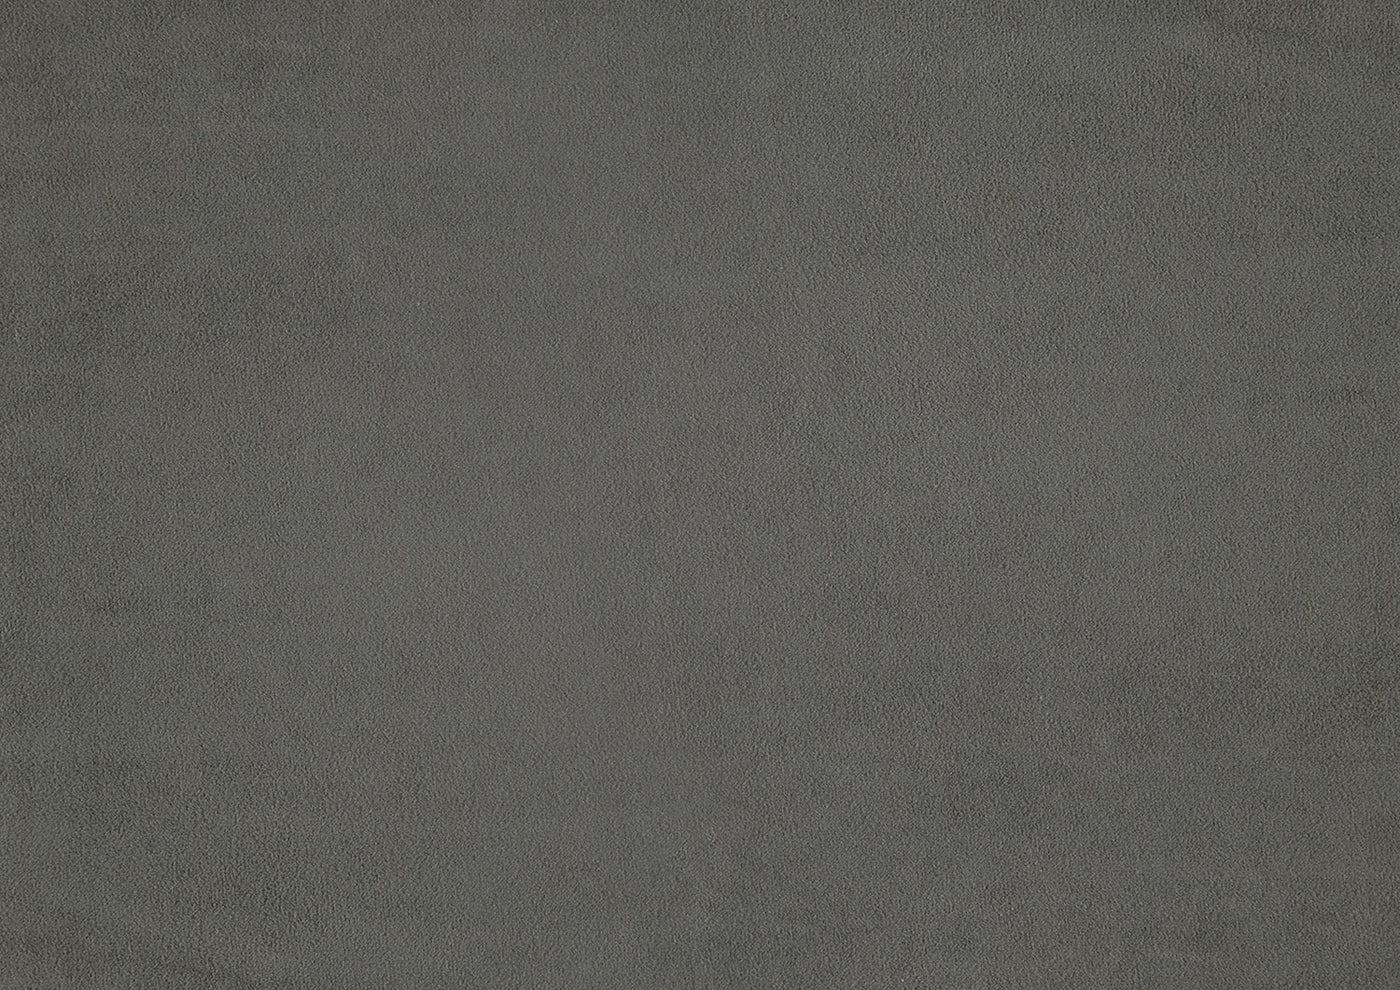 Emberly 5-Piece Sintered Stone Dining Set - Grey, Black